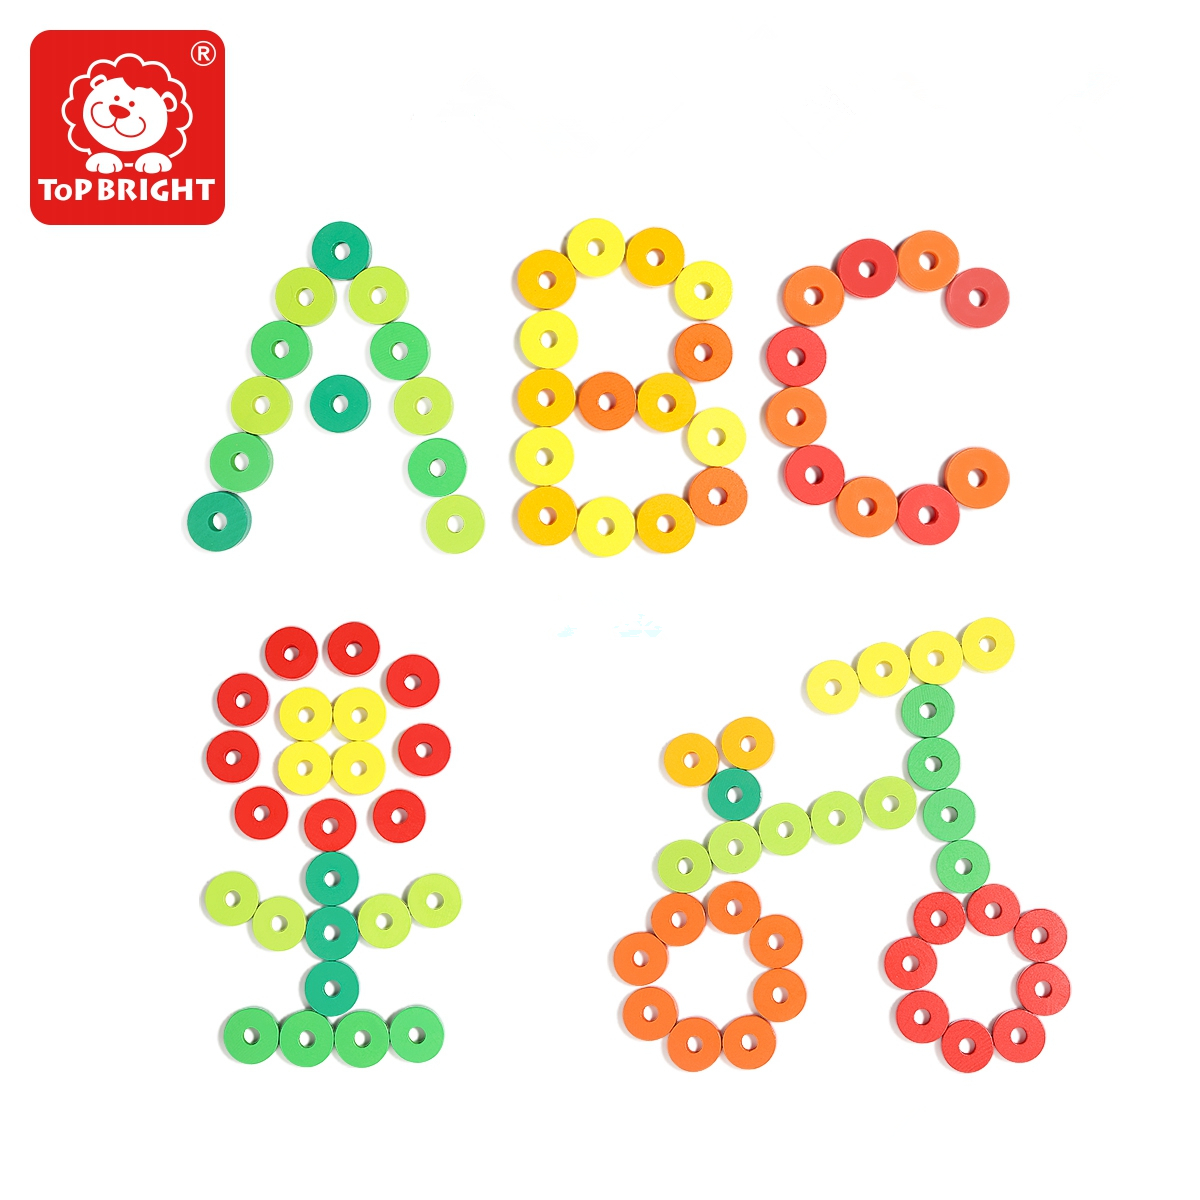 TopBright-6540 Blocks Montessori Classic Math Rainbow Donuts Box Educational Toys for Kids